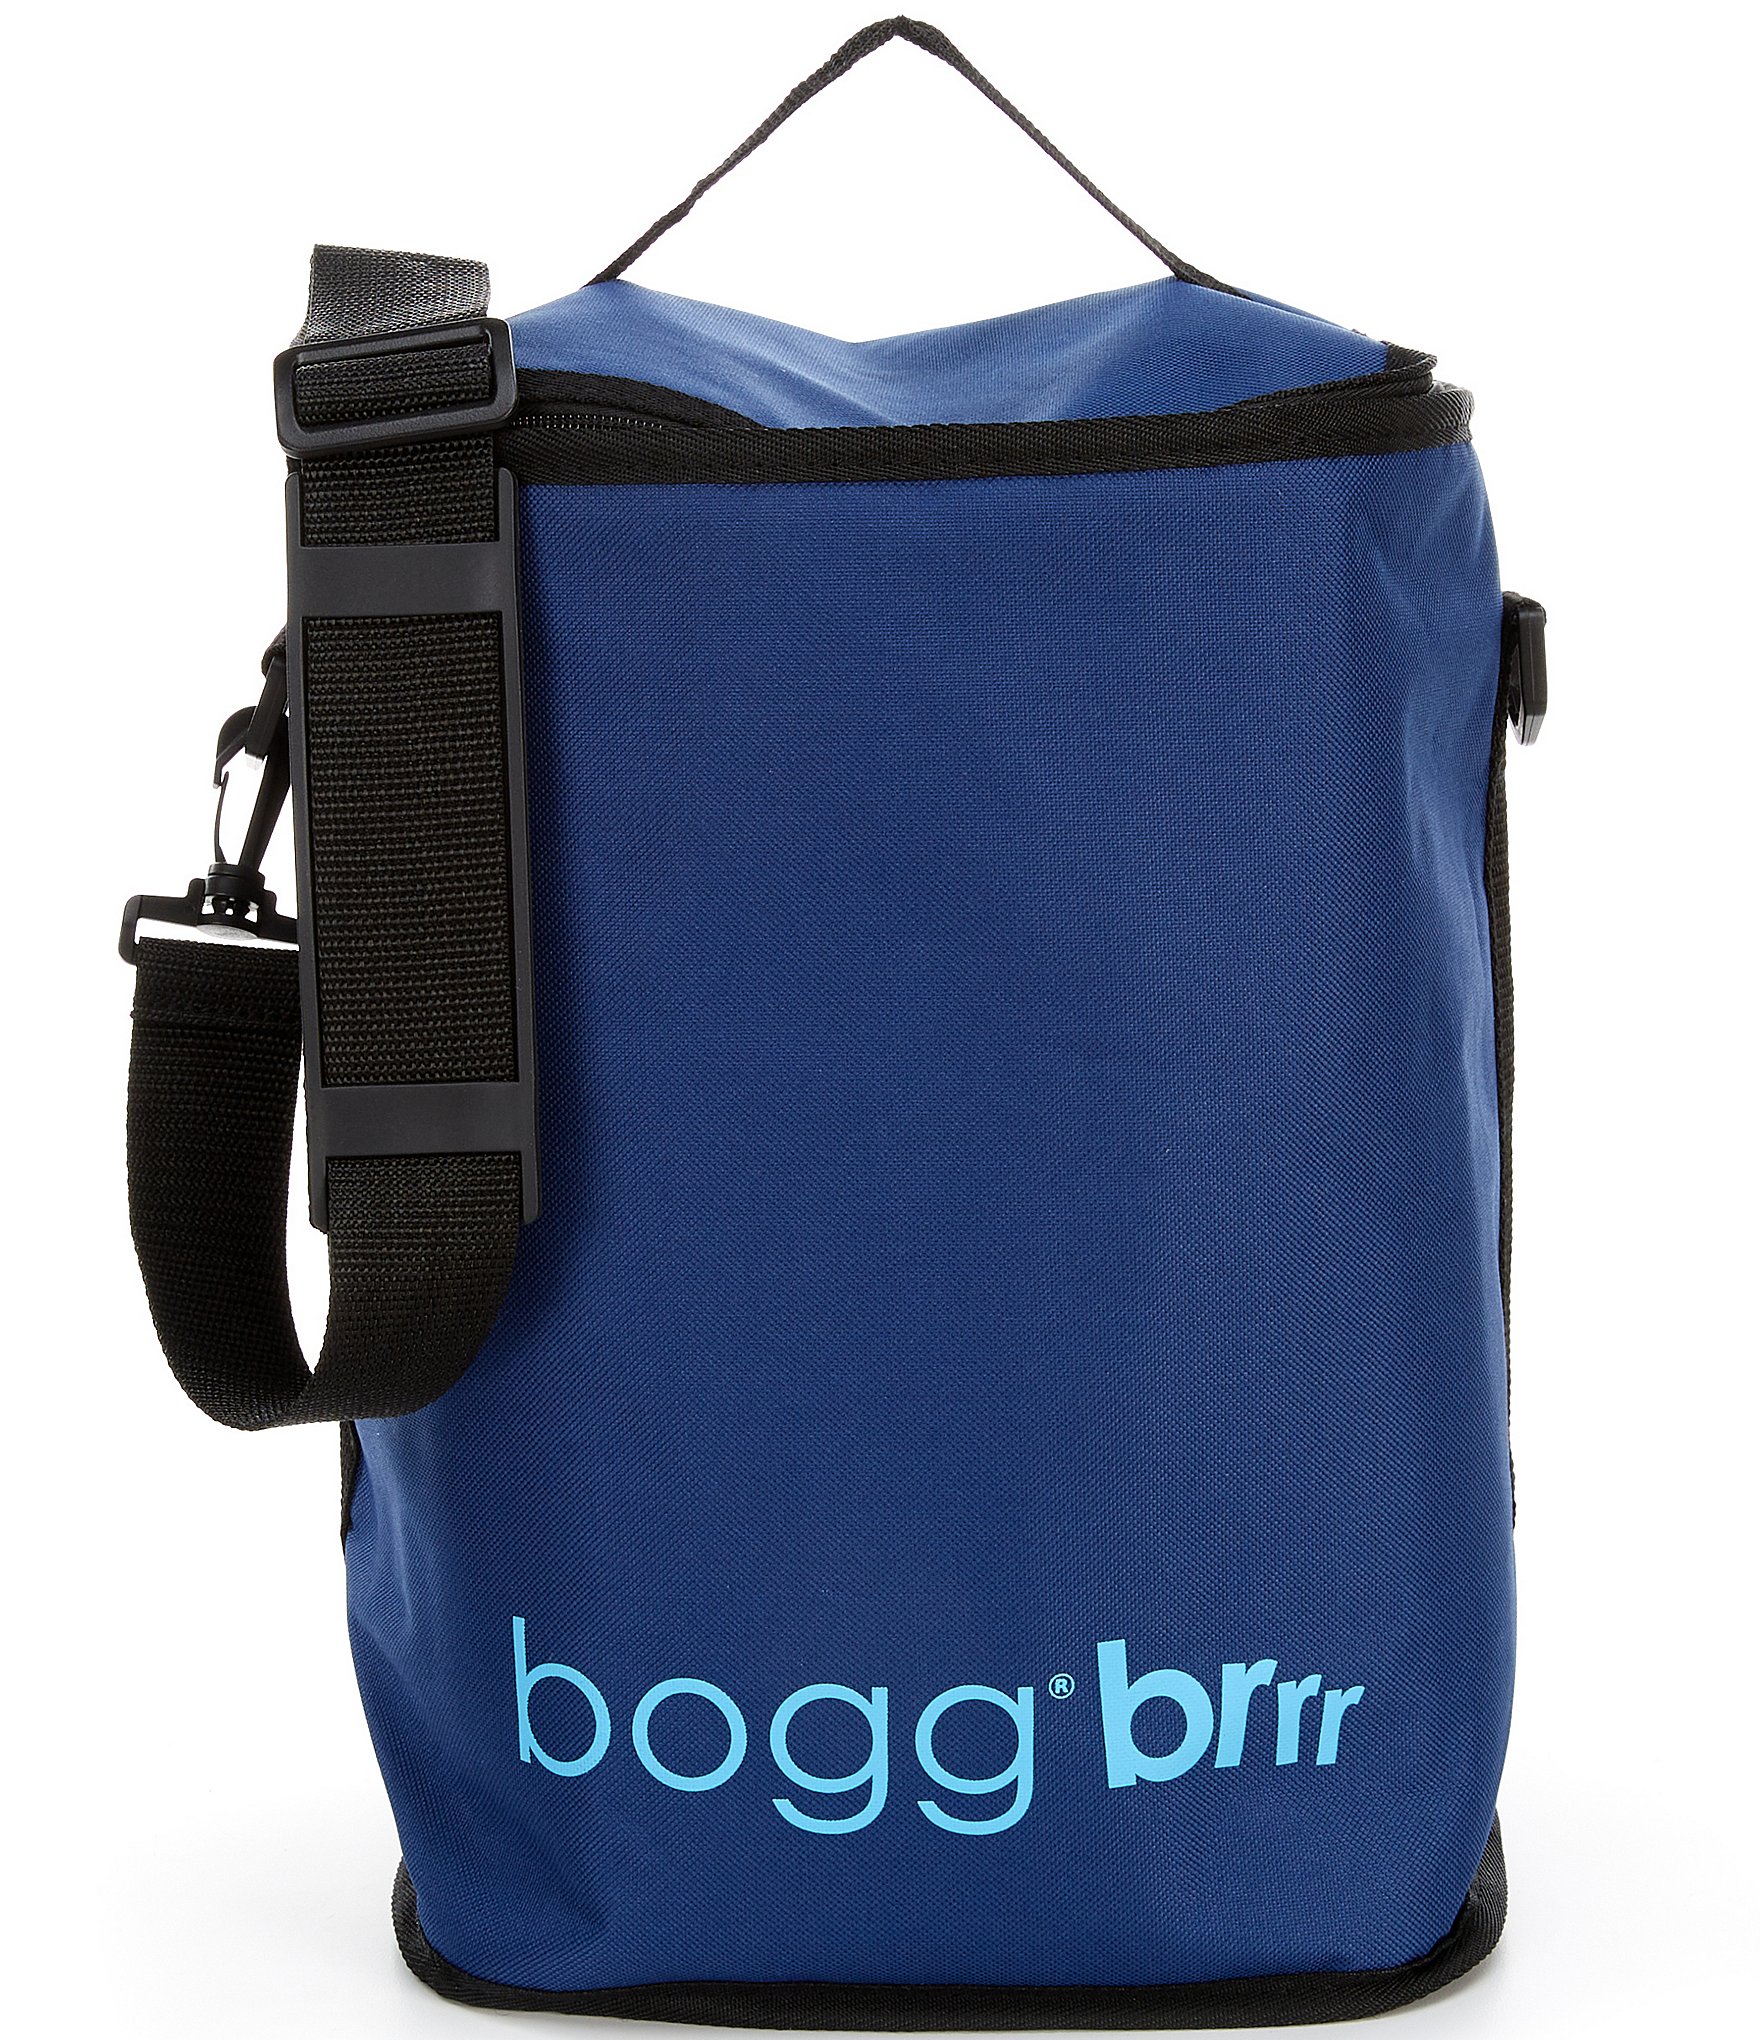 Original Brrr Cooler Insert | Bogg Bags